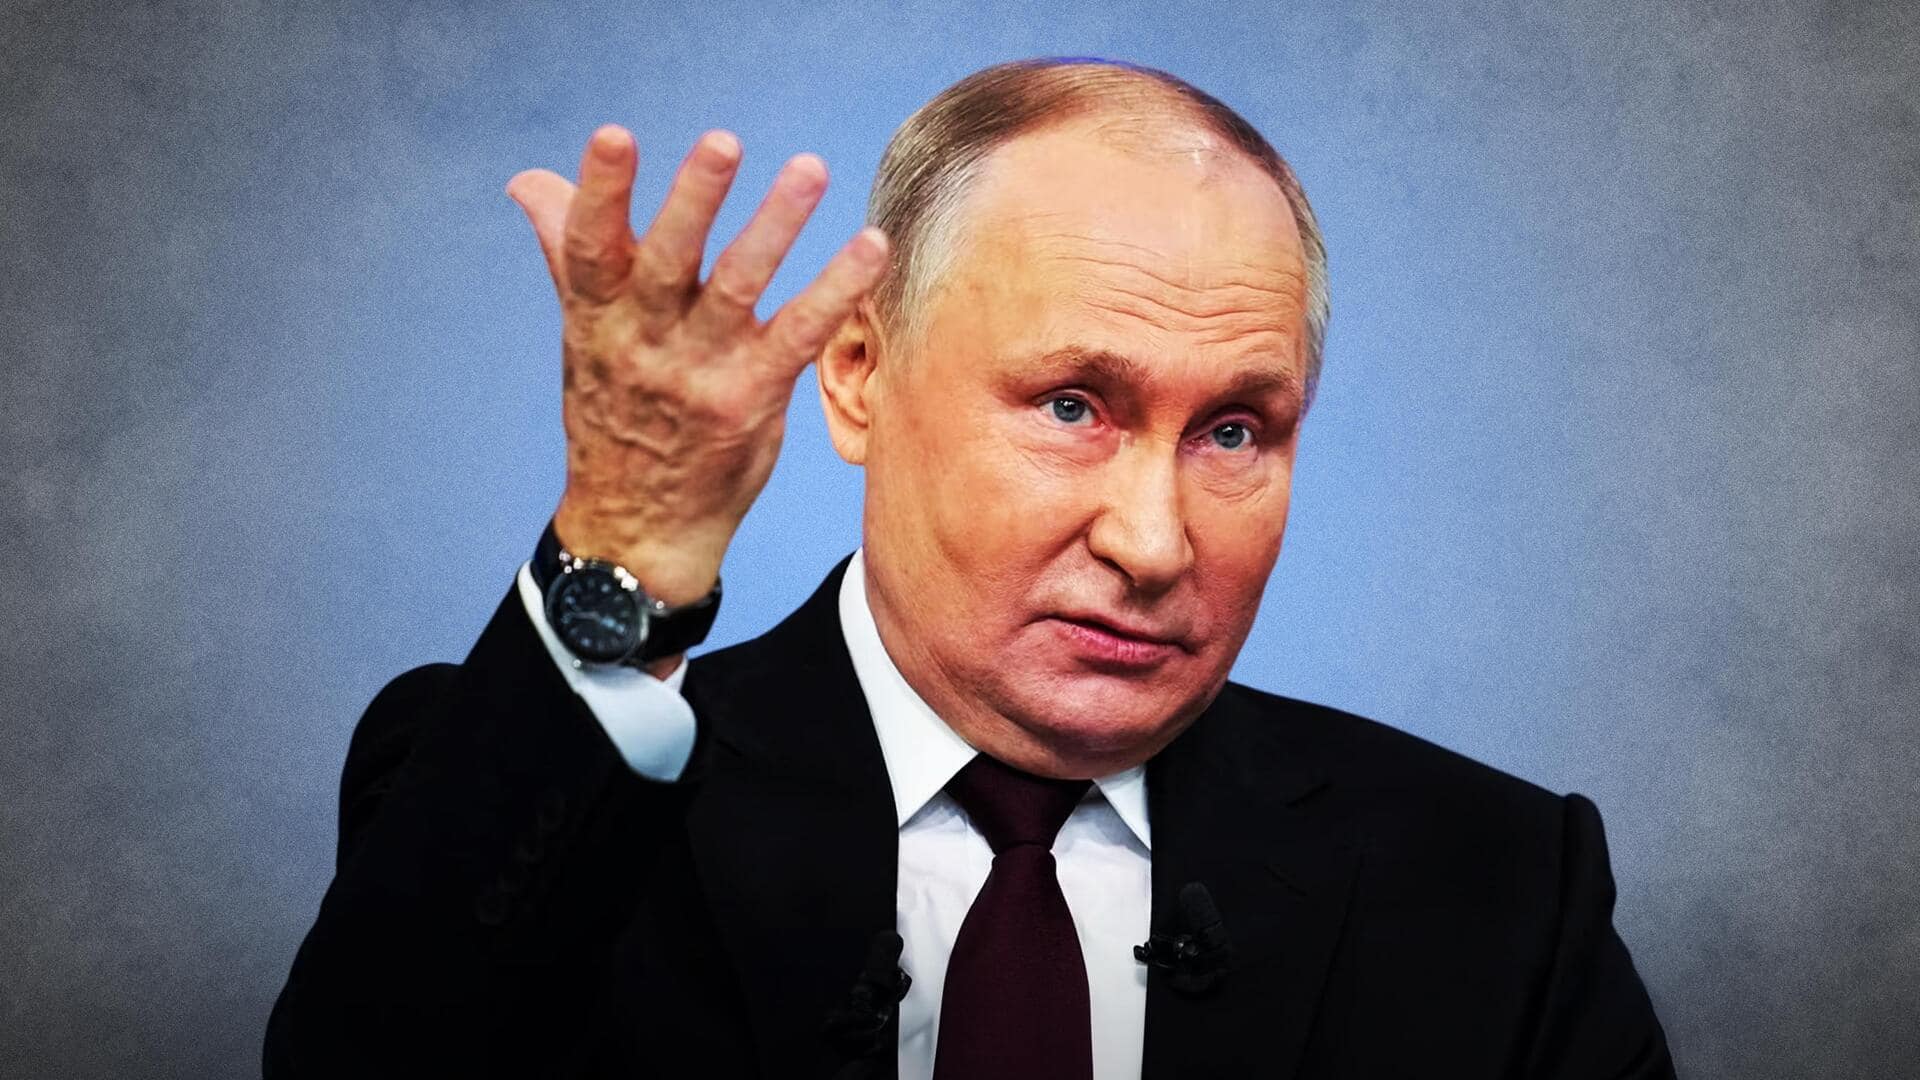 Russia presidential poll: Vladimir Putin secures record post-Soviet landslide victory